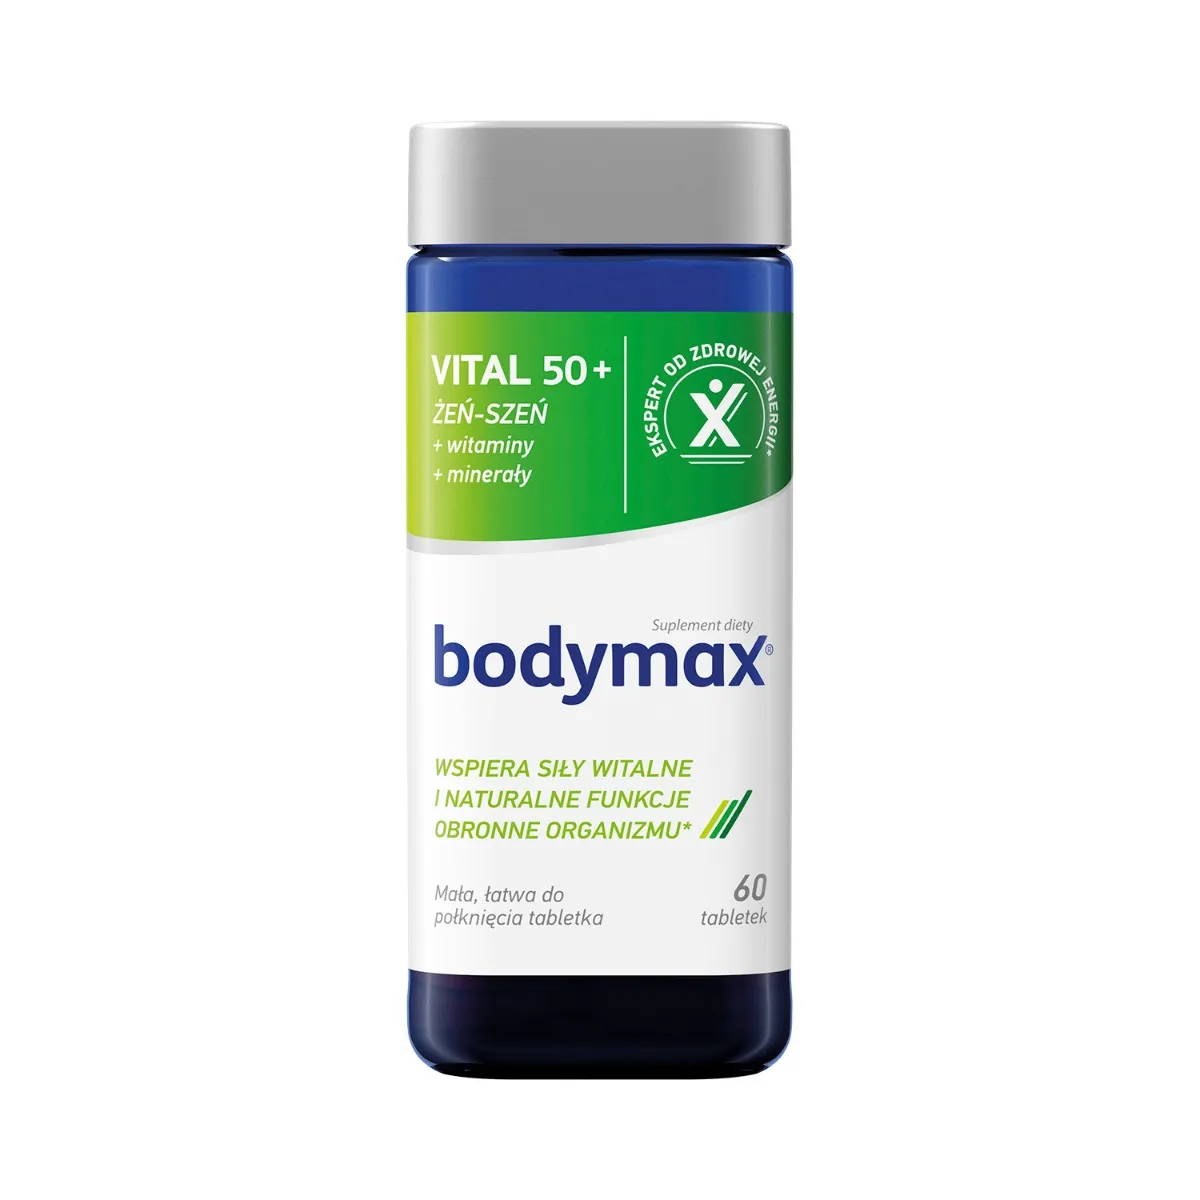 Bodymax Vital 50+, suplement diety, 60 tabletek